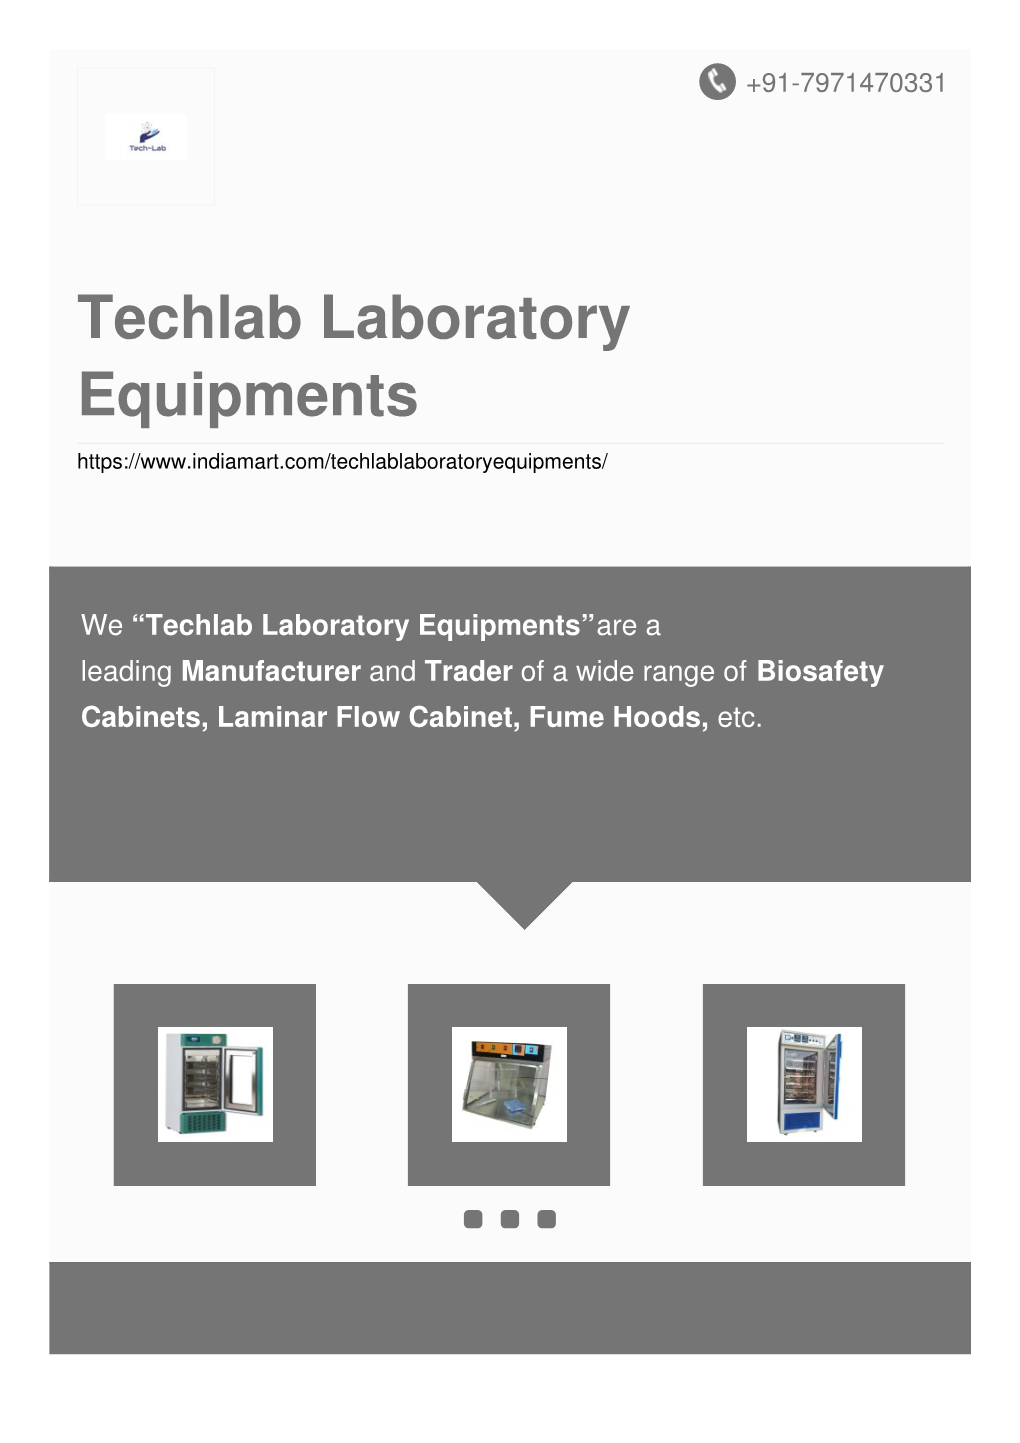 Techlab Laboratory Equipments